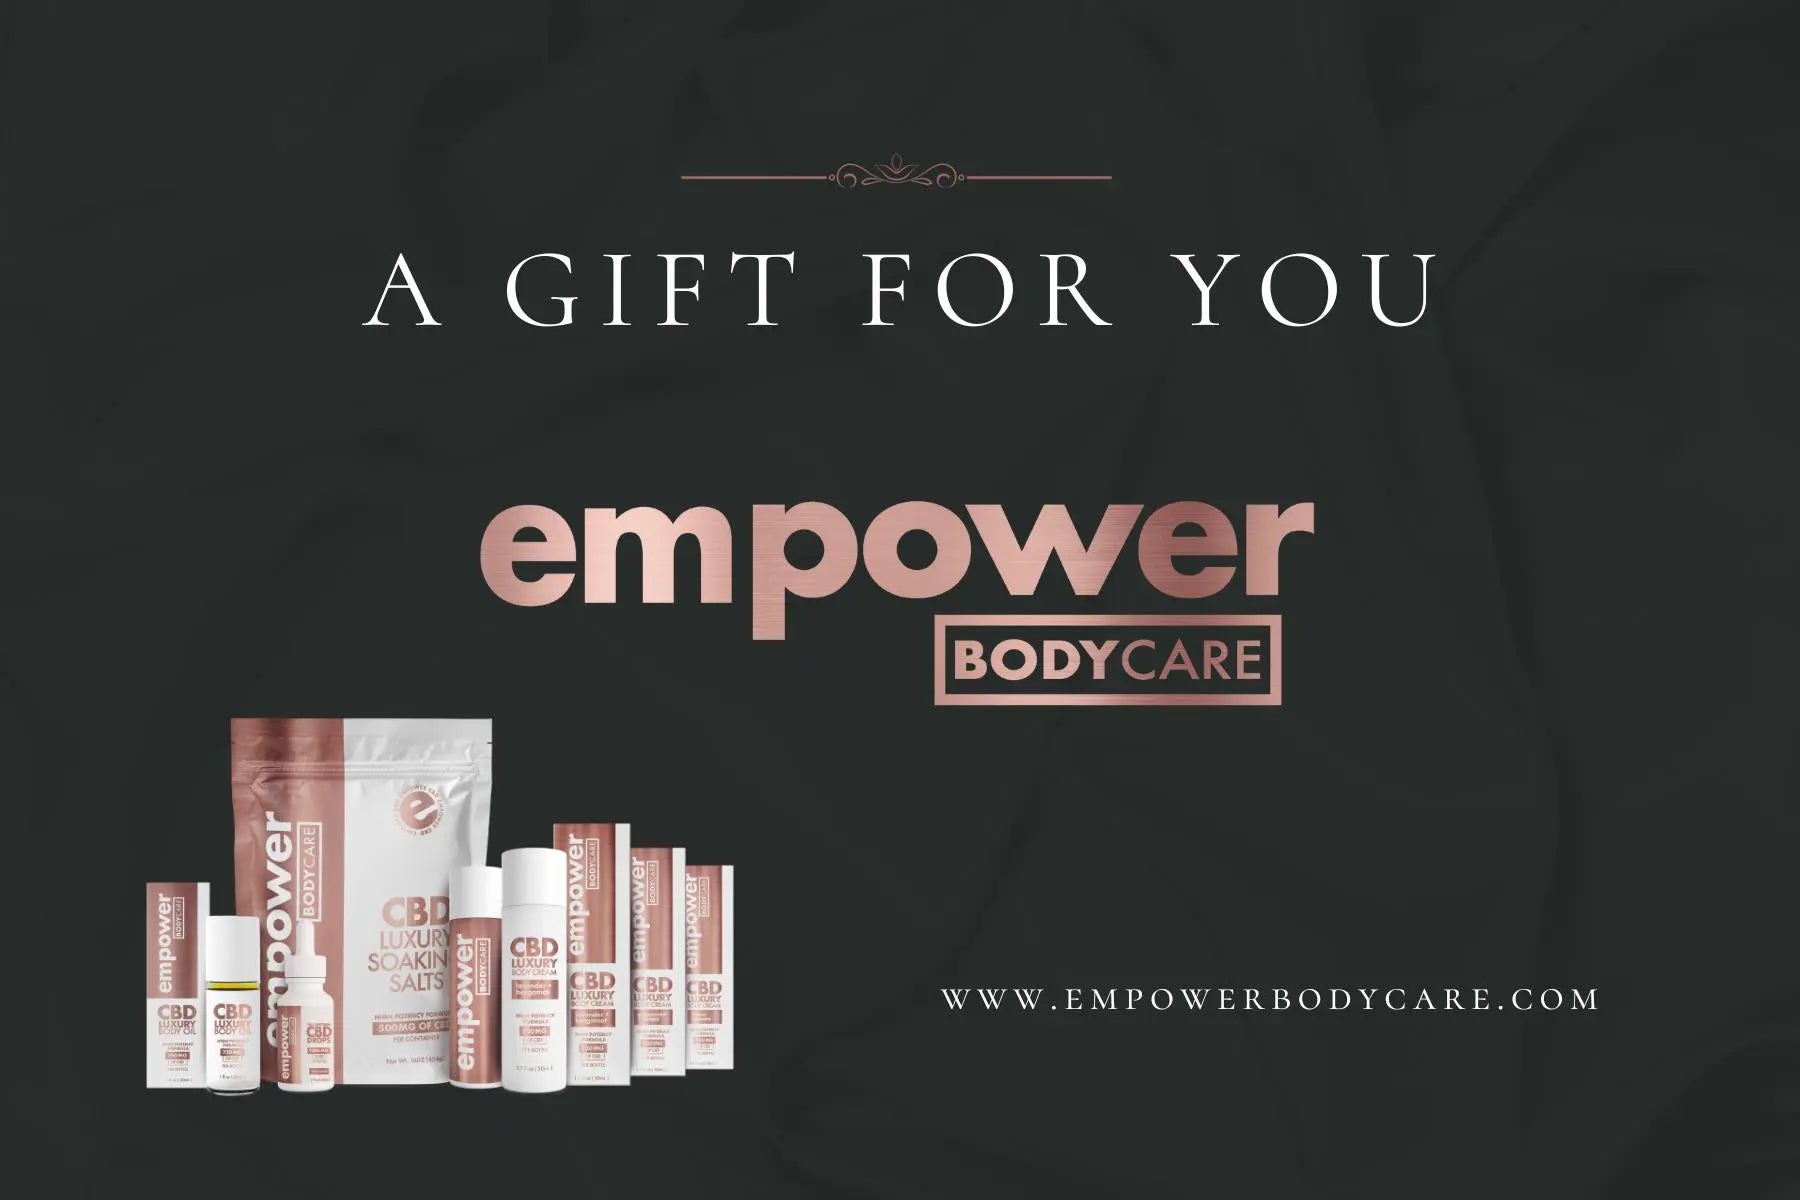 Empower BodyCare Gift Card EmpowerBodyCare